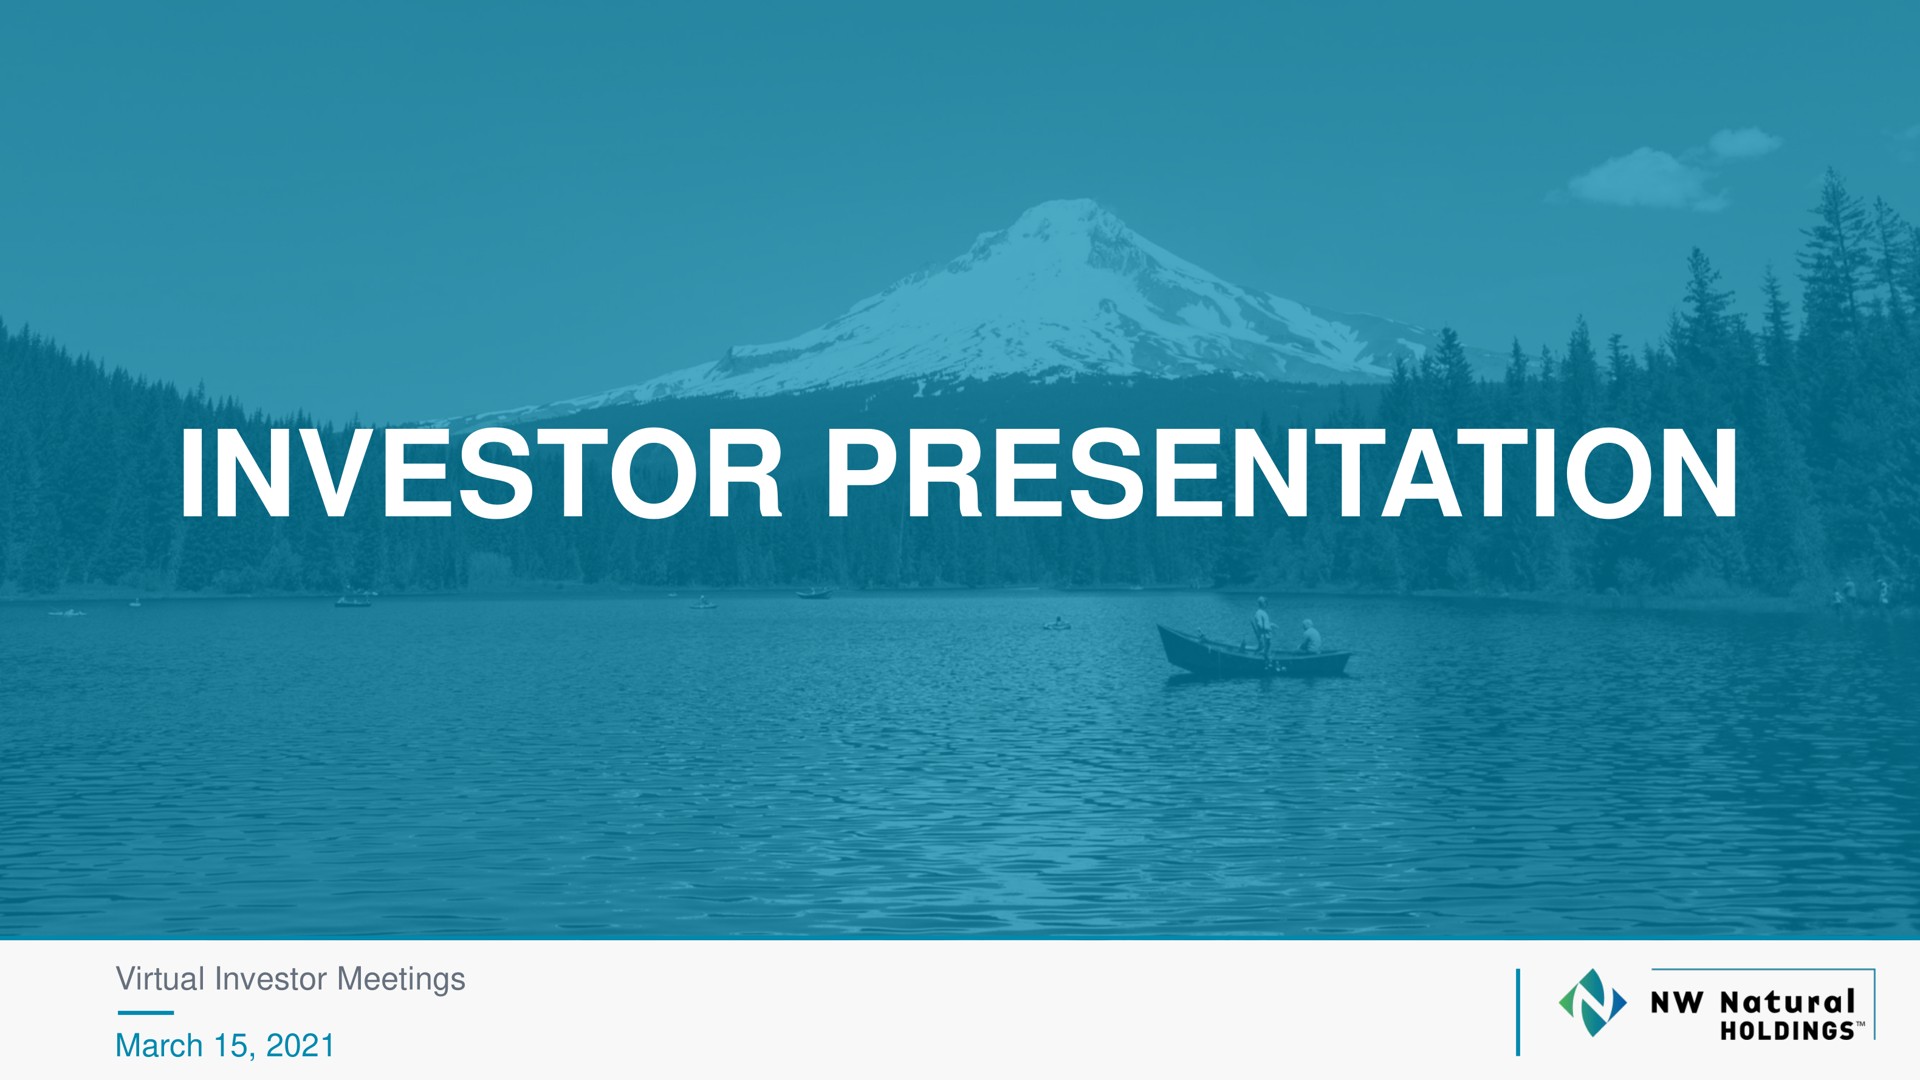 investor presentation | NW Natural Holdings